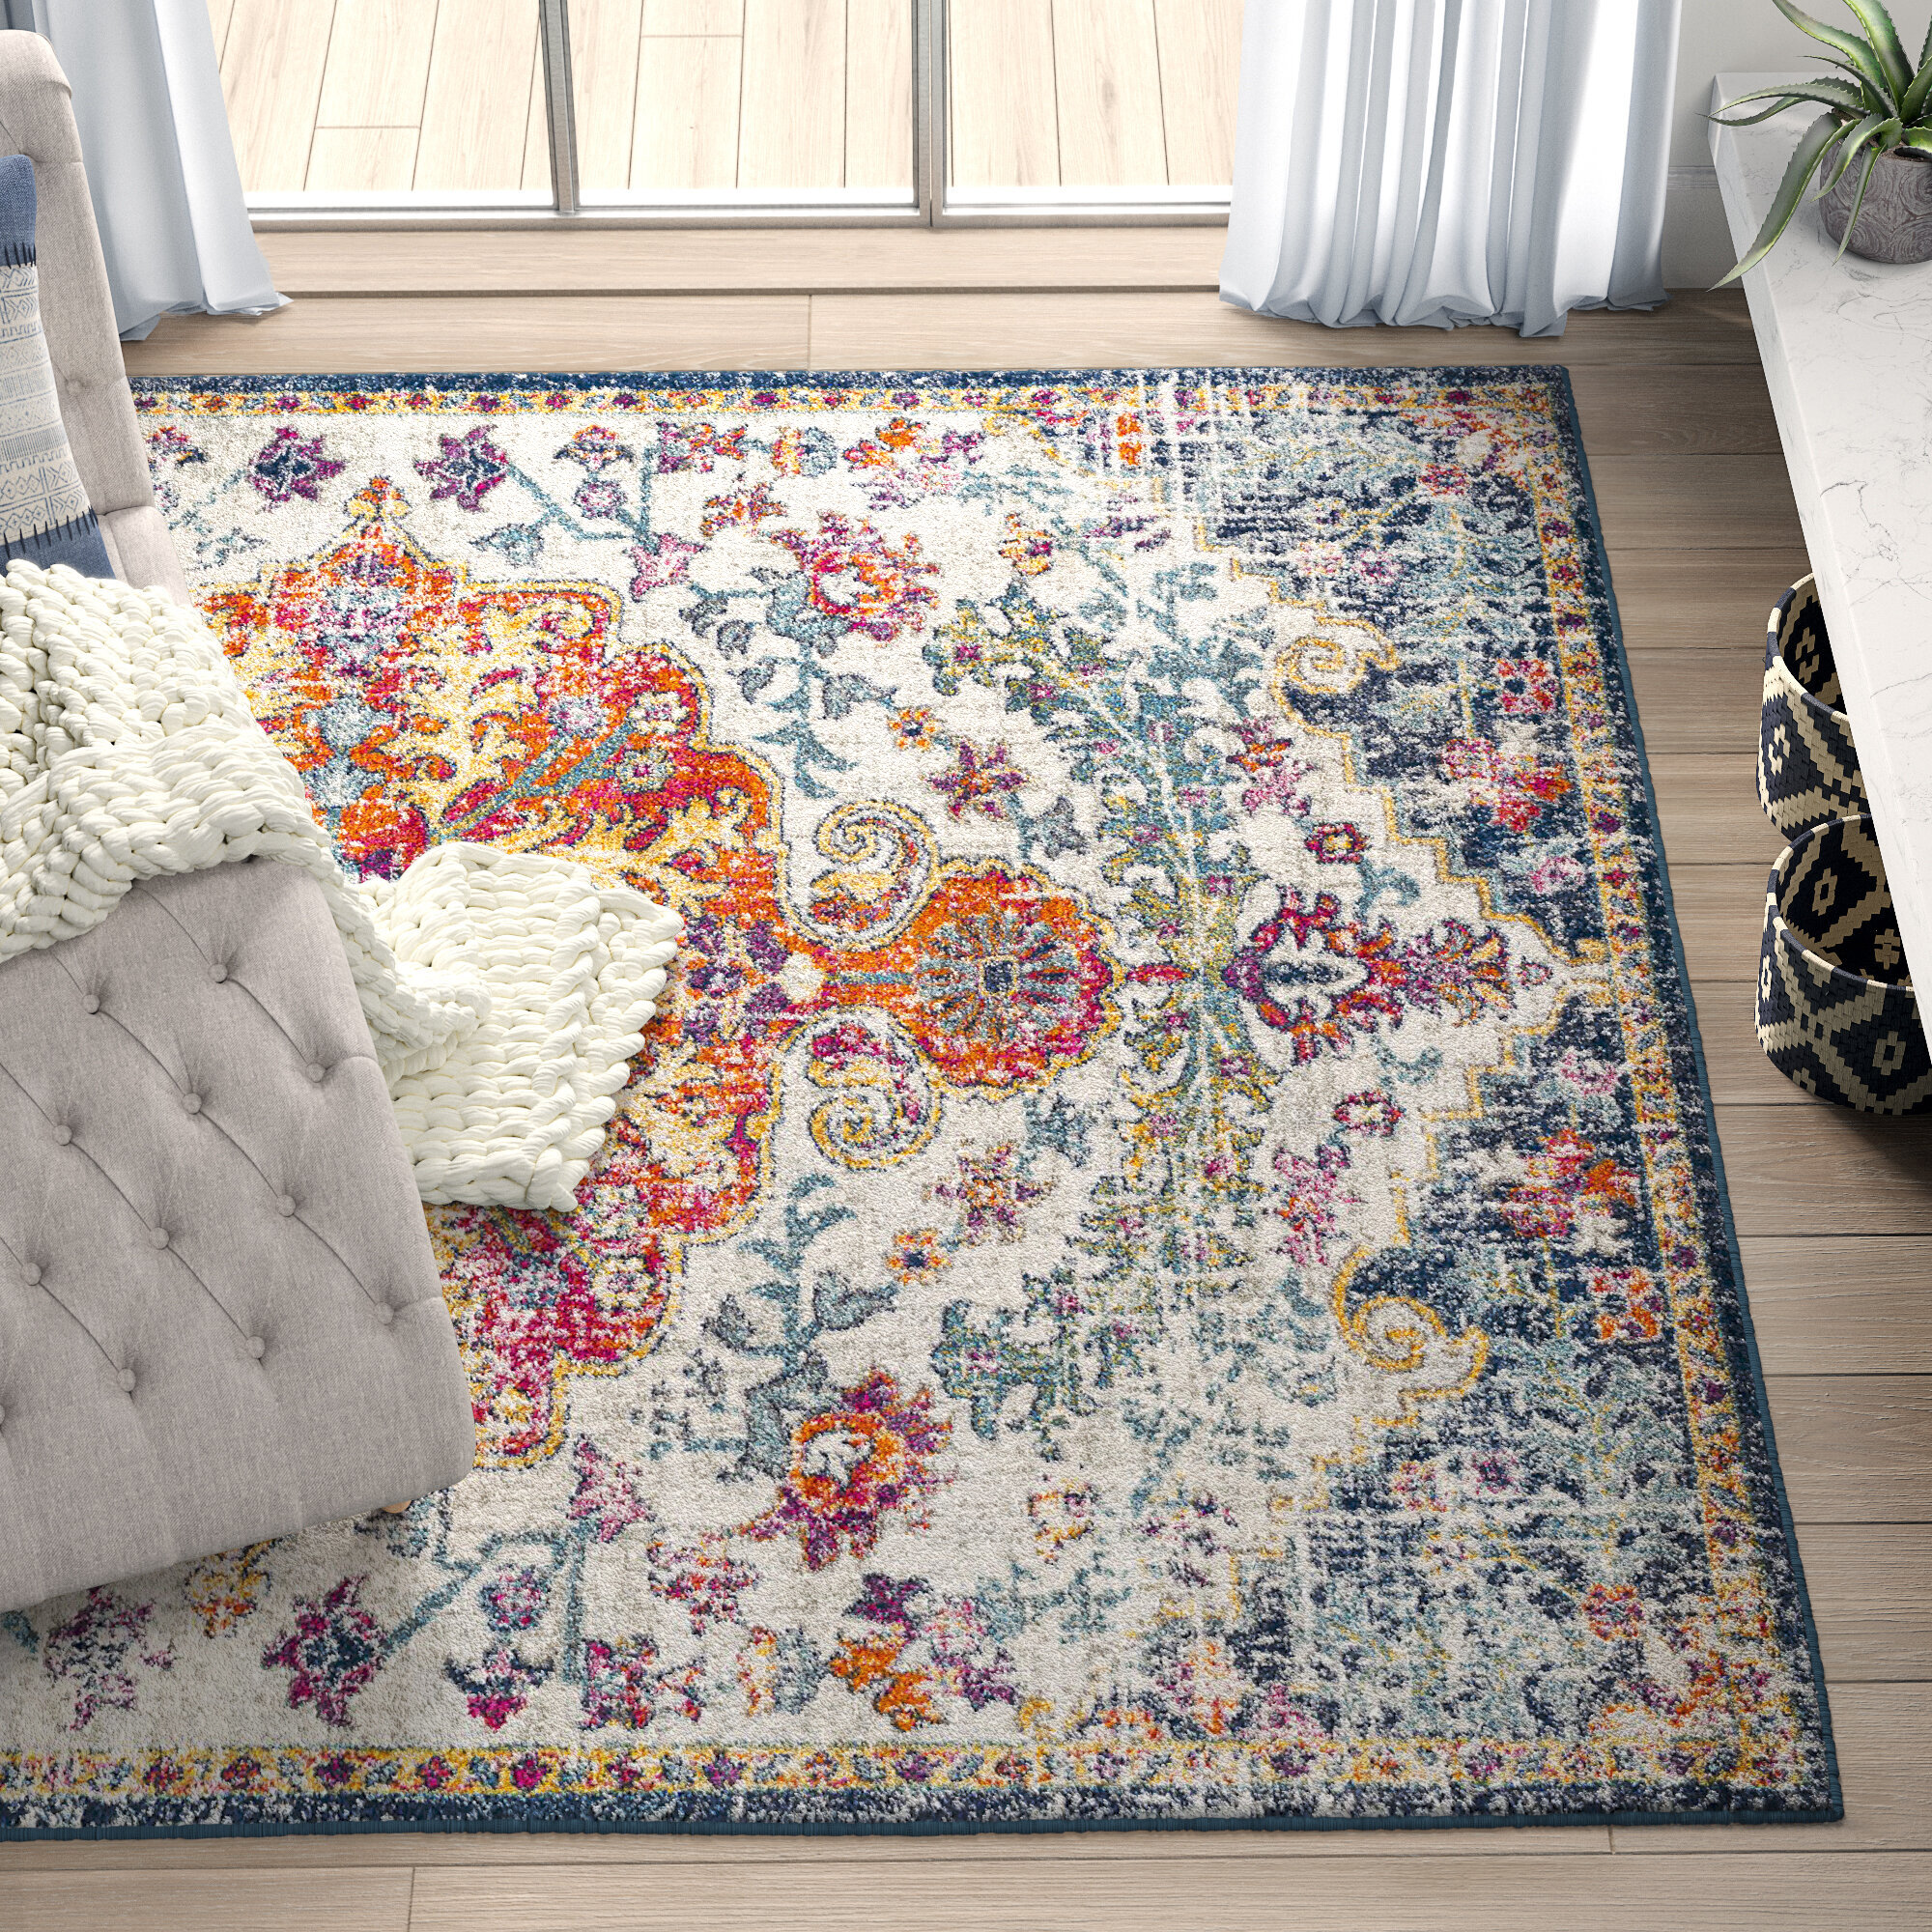 Extra Large Area carpet A2Z Rug|Santorini Blue Medallion Design With Floral Border|Sitting Room Modern Vintage Classic Area Rug|Soft Short Medium Pile|240x330cm 7'10x10'10ft